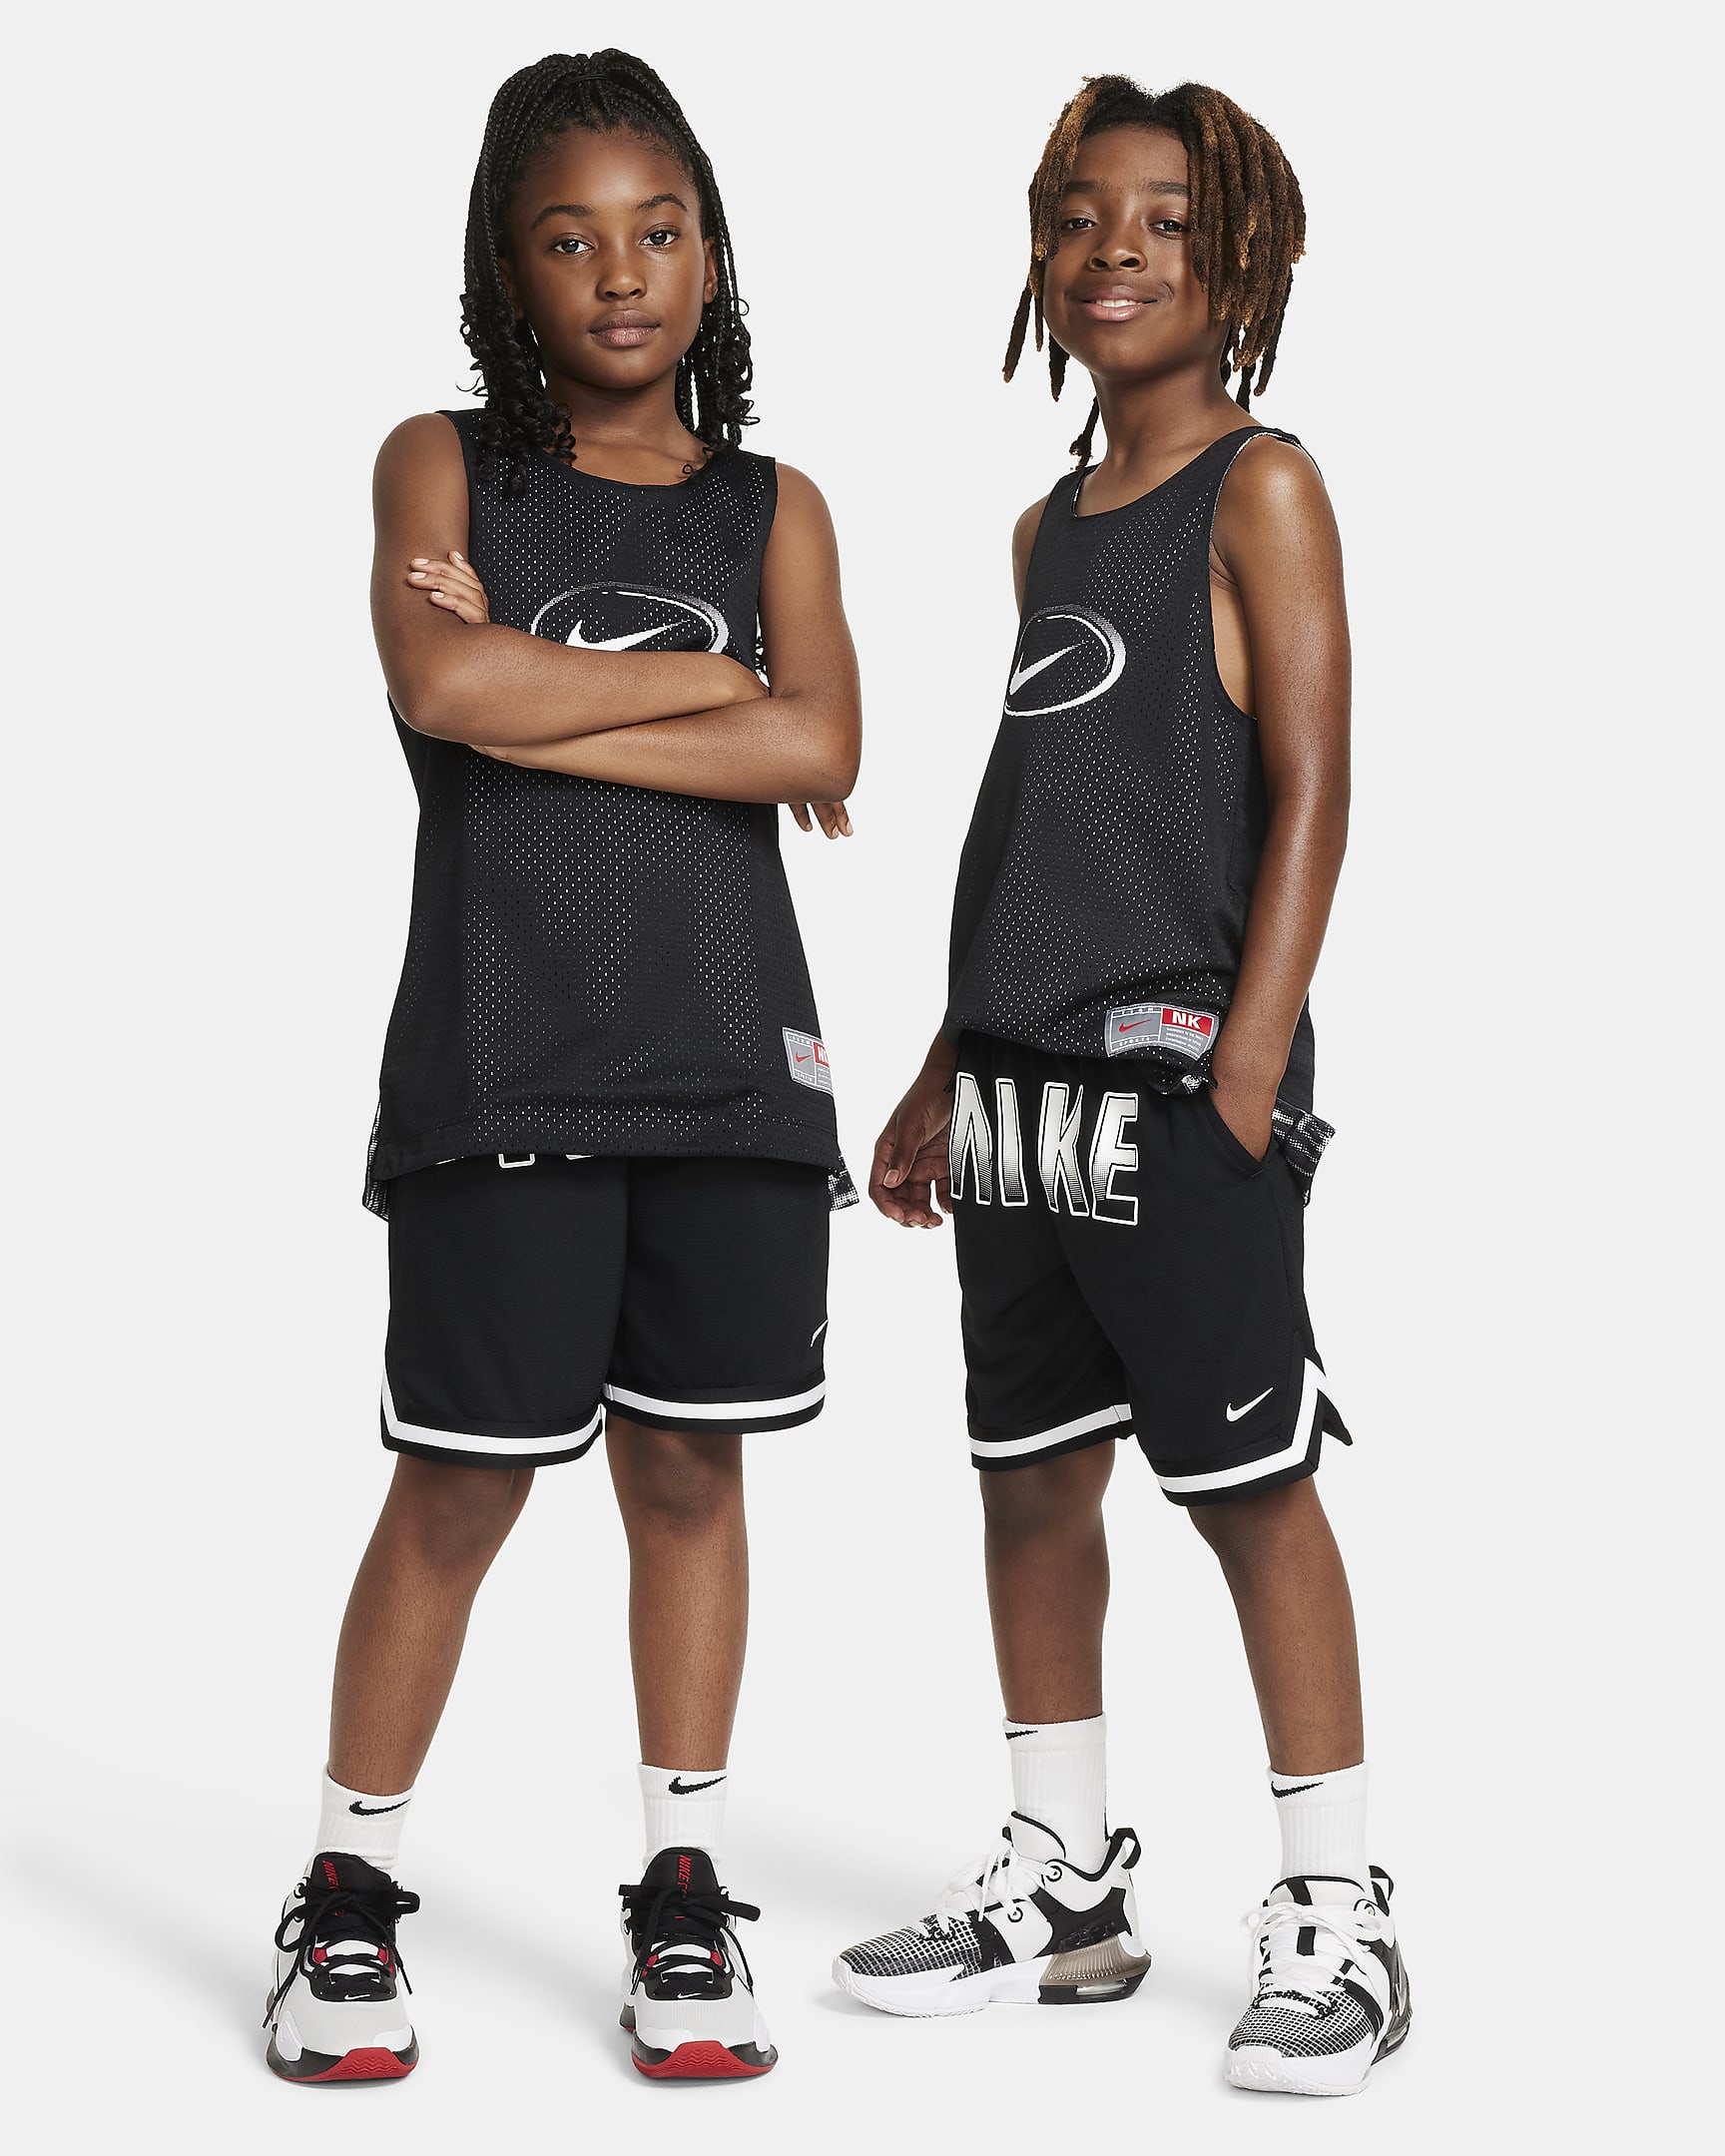 Nike Culture of Basketball Older Kids' Reversible Jersey. Nike UK